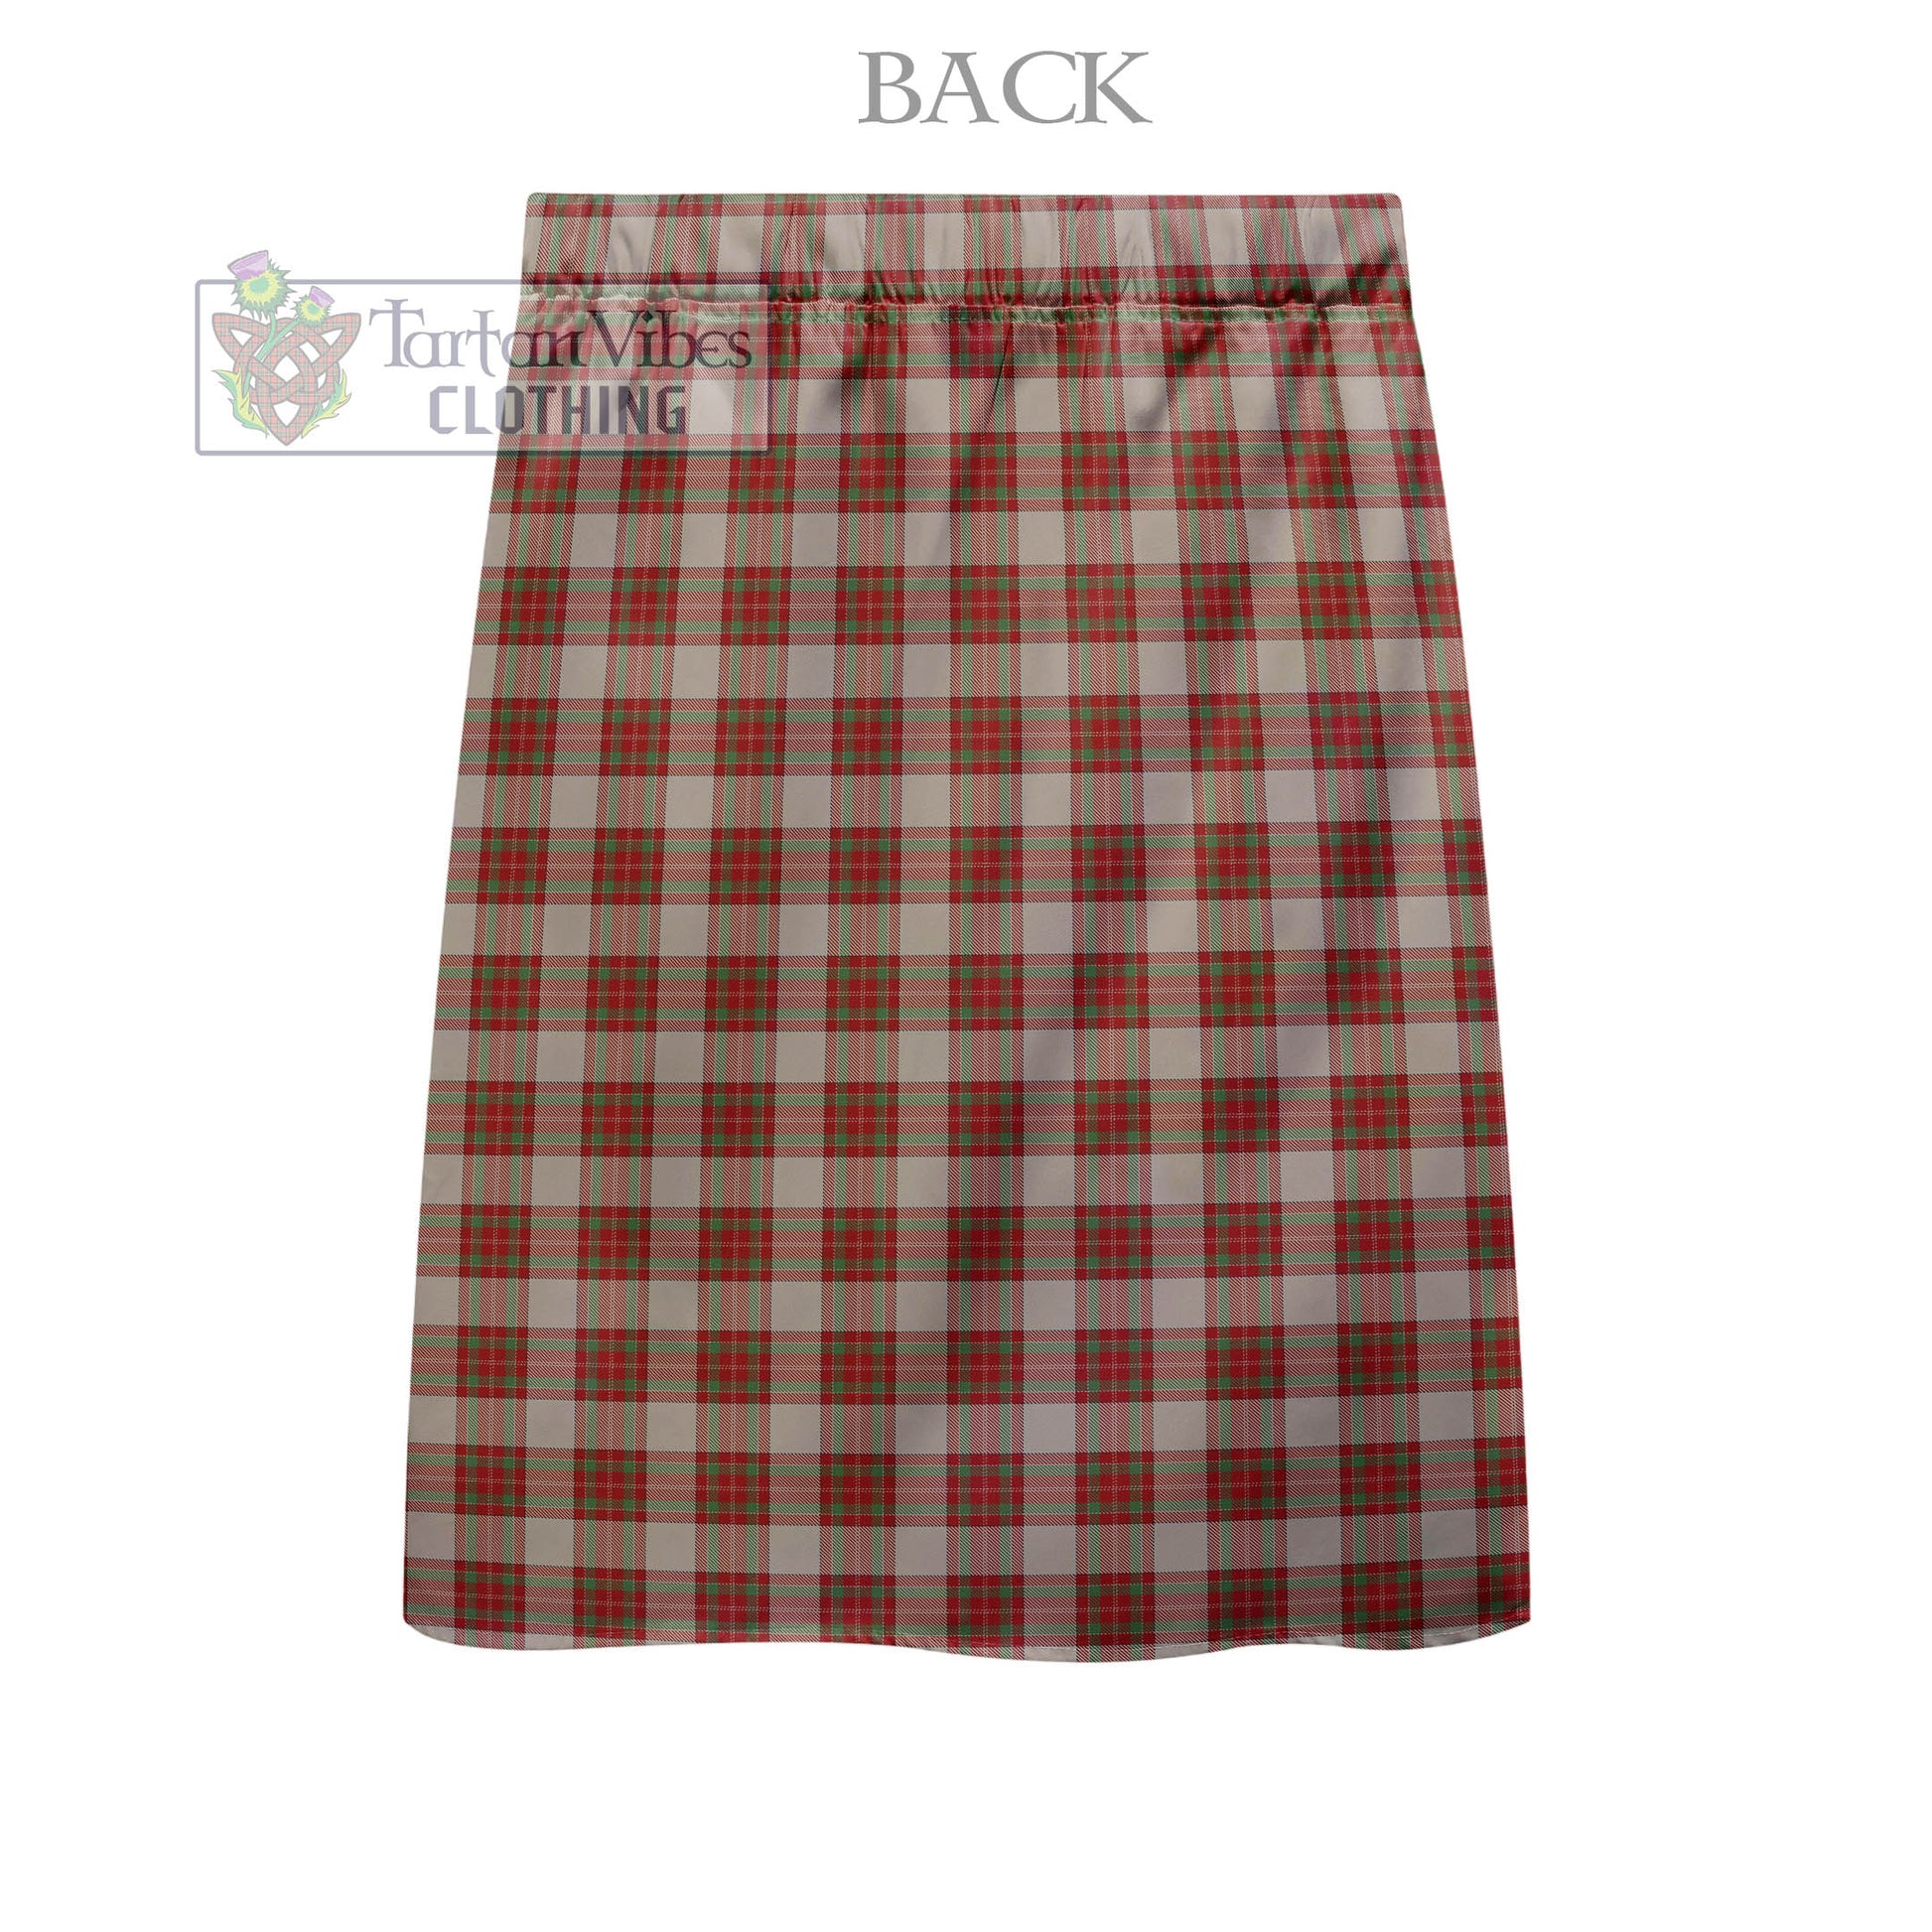 Tartan Vibes Clothing McBrayer Dress Tartan Men's Pleated Skirt - Fashion Casual Retro Scottish Style